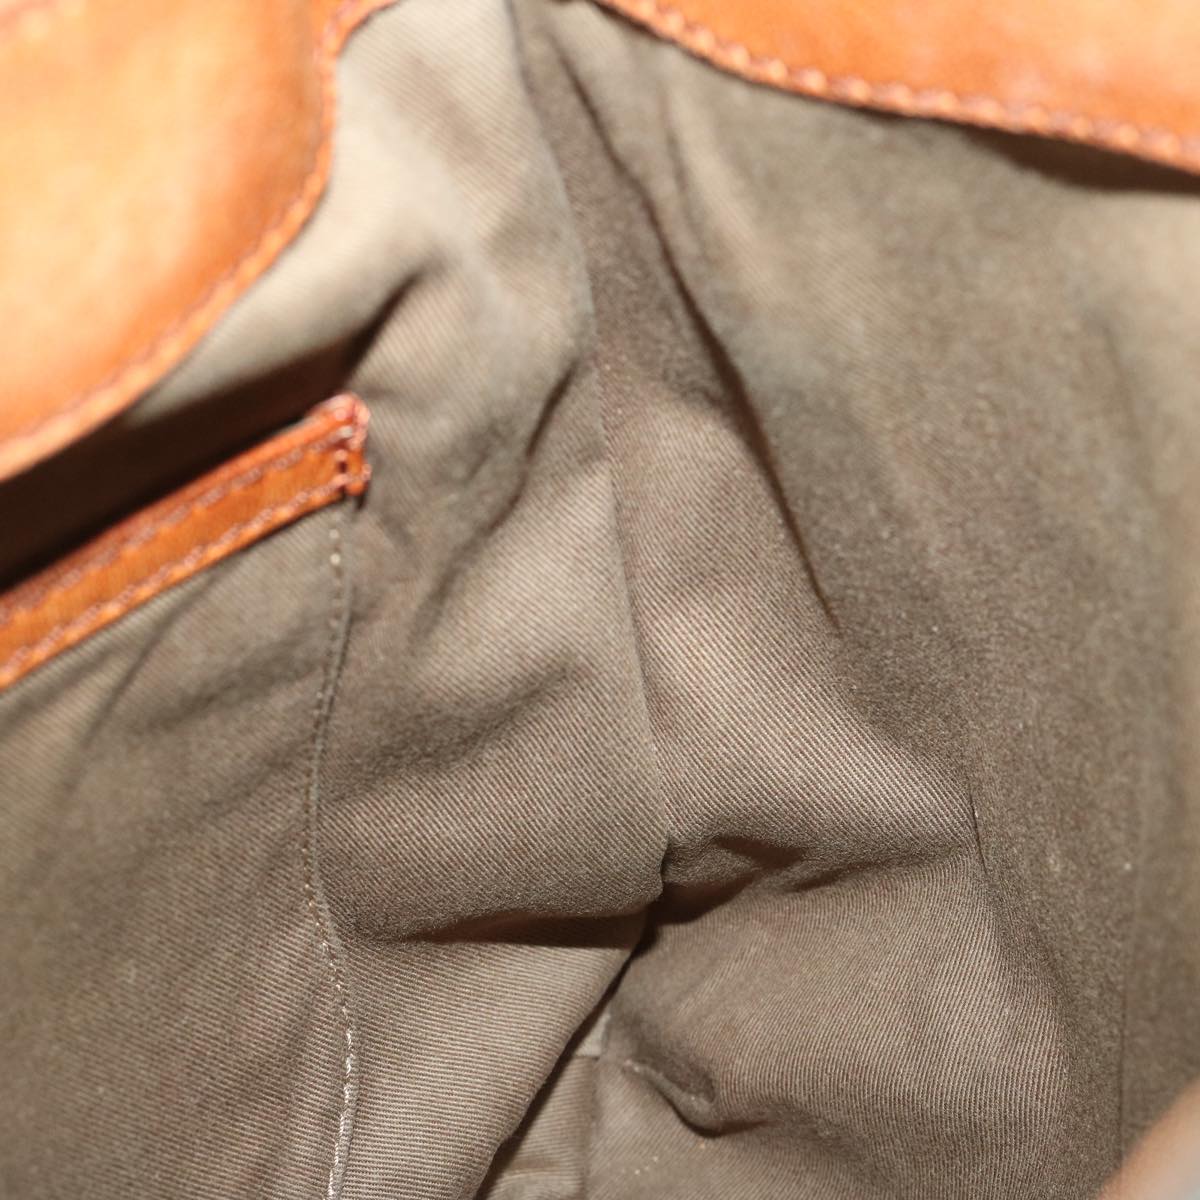 Chloe Harley Shoulder Bag Canvas Leather Beige Brown Auth 67268